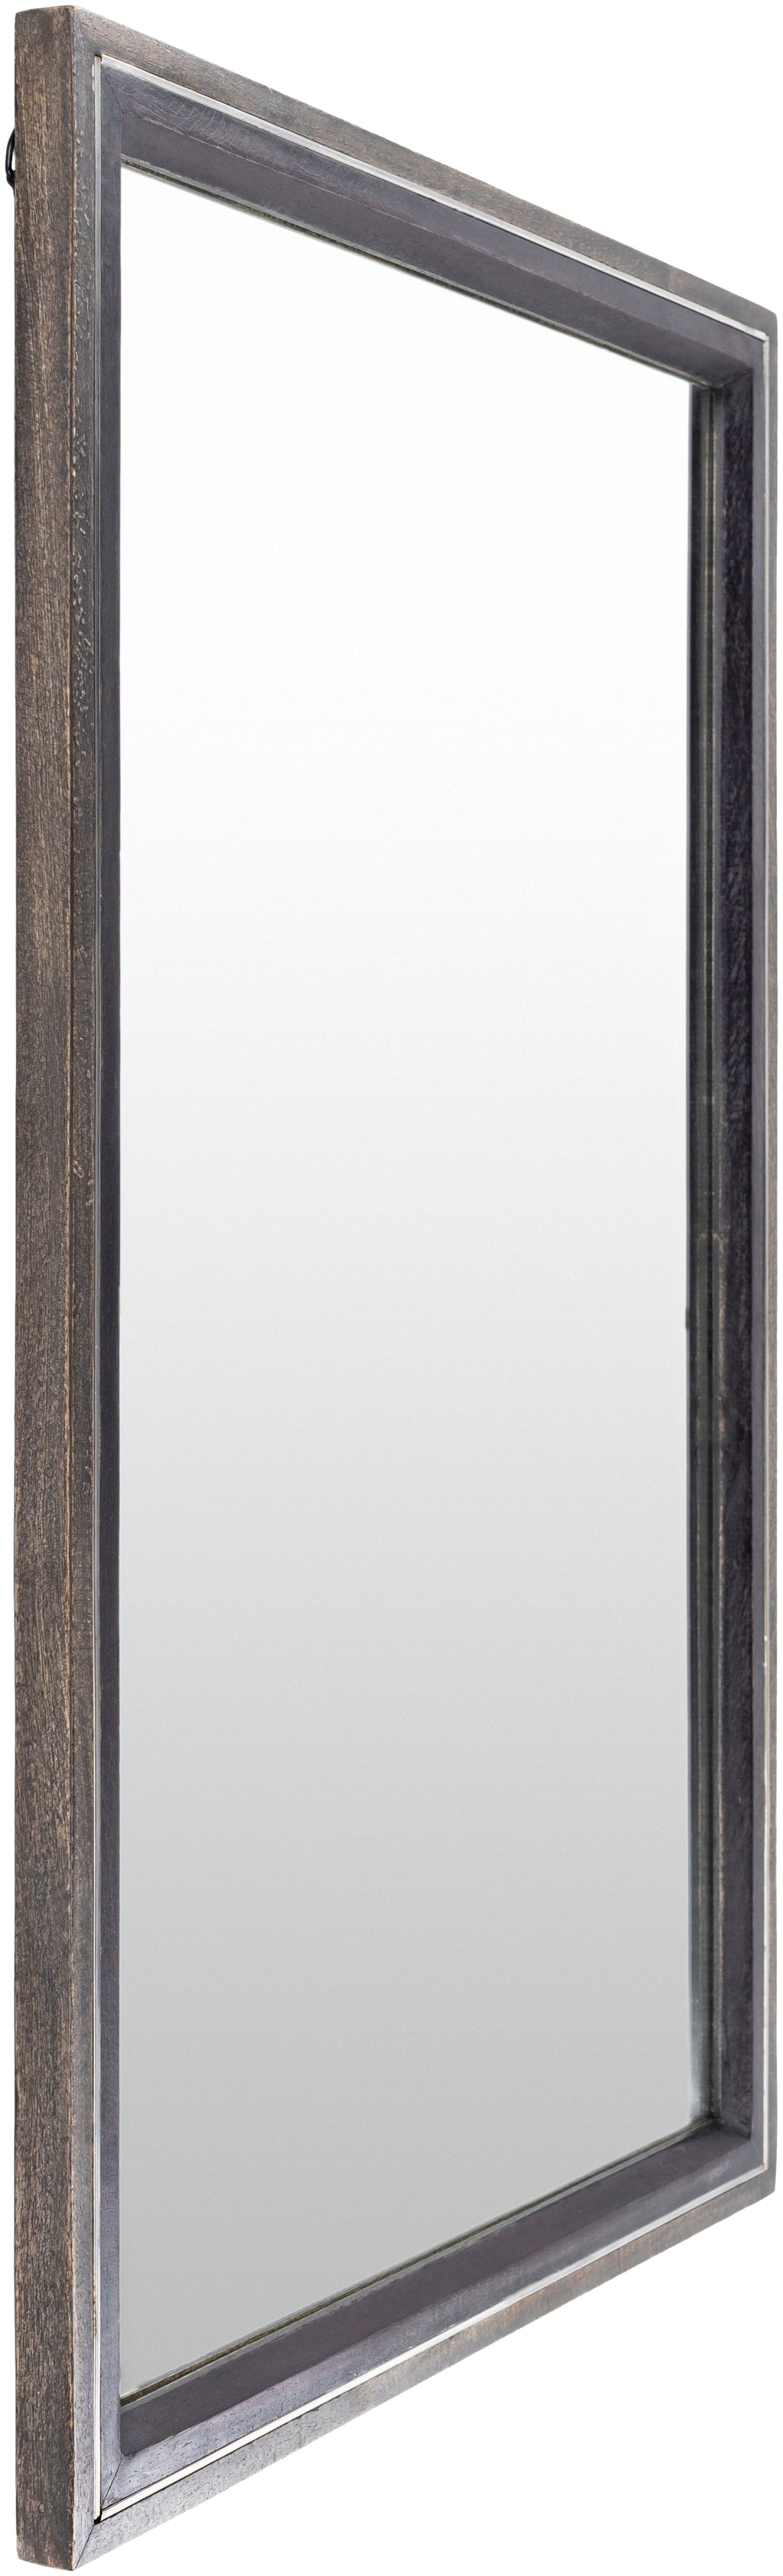 Hanover Wood Gray Mirror 3'2"H x 2'2"W